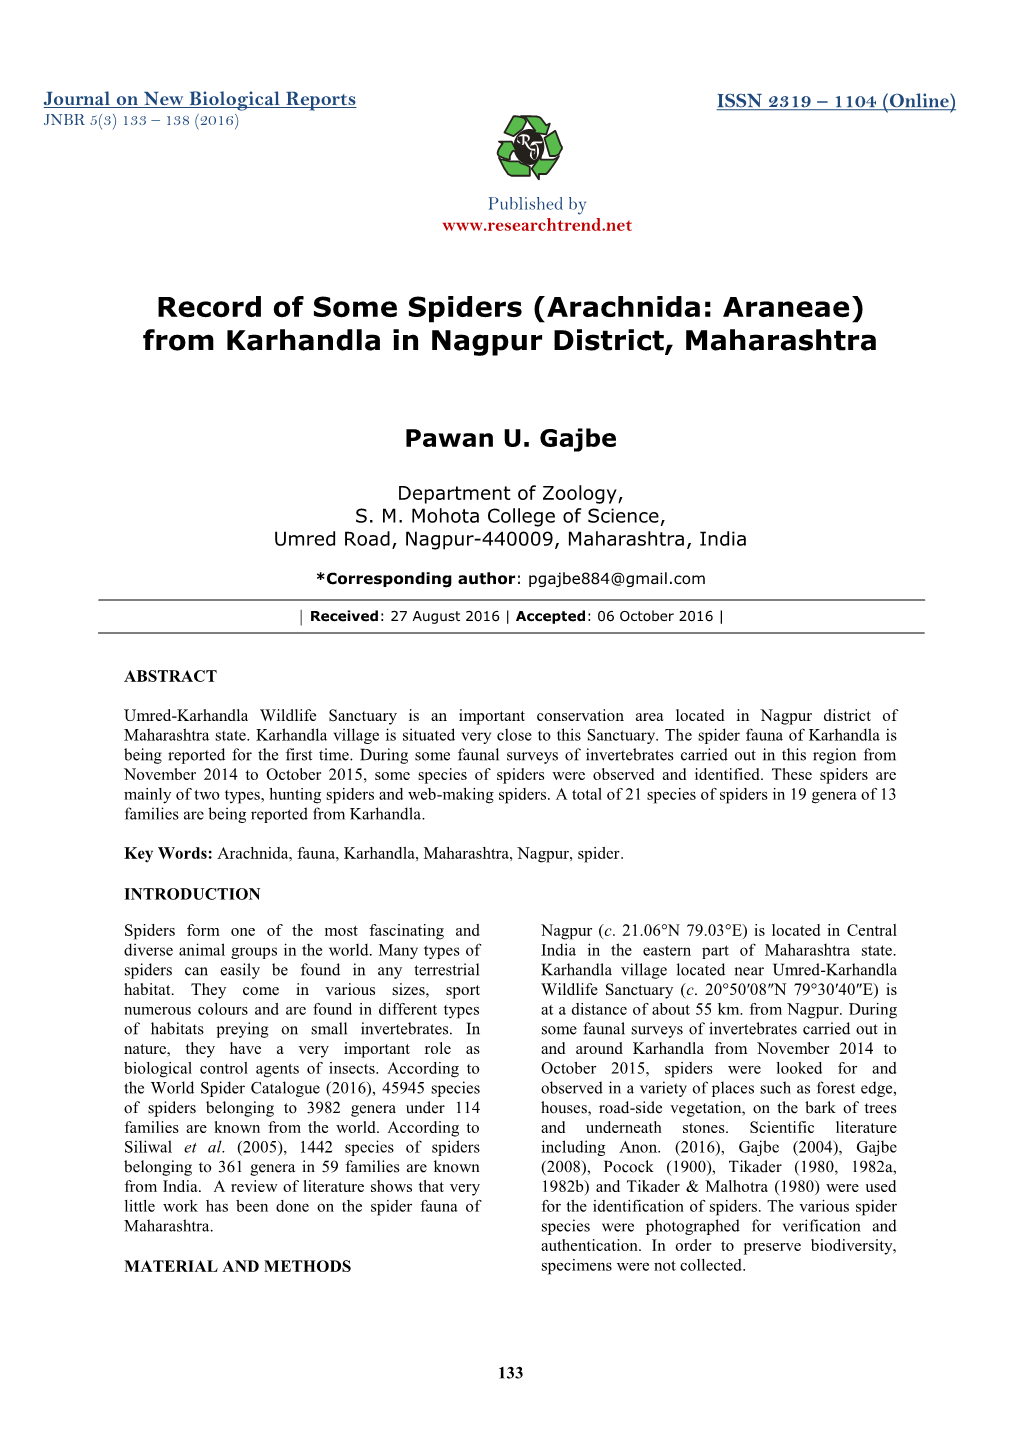 Record of Some Spiders (Arachnida: Araneae) from Karhandla in Nagpur District, Maharashtra